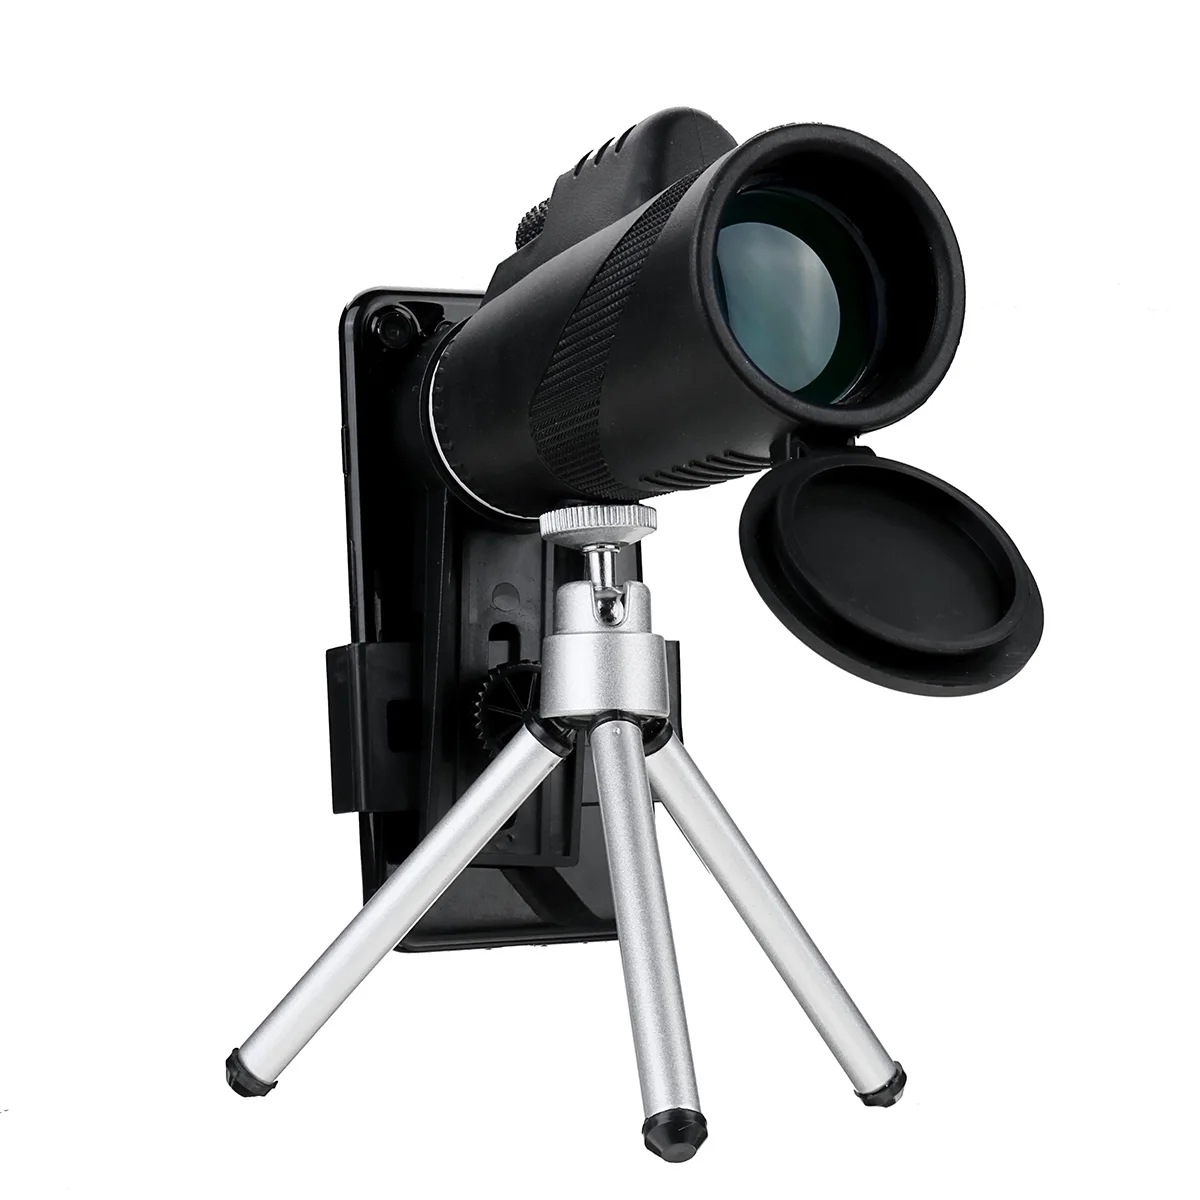 Telescope With Tripod & Bag For Samsung Galaxy J3 35x50 Zoom Lens Monocular 